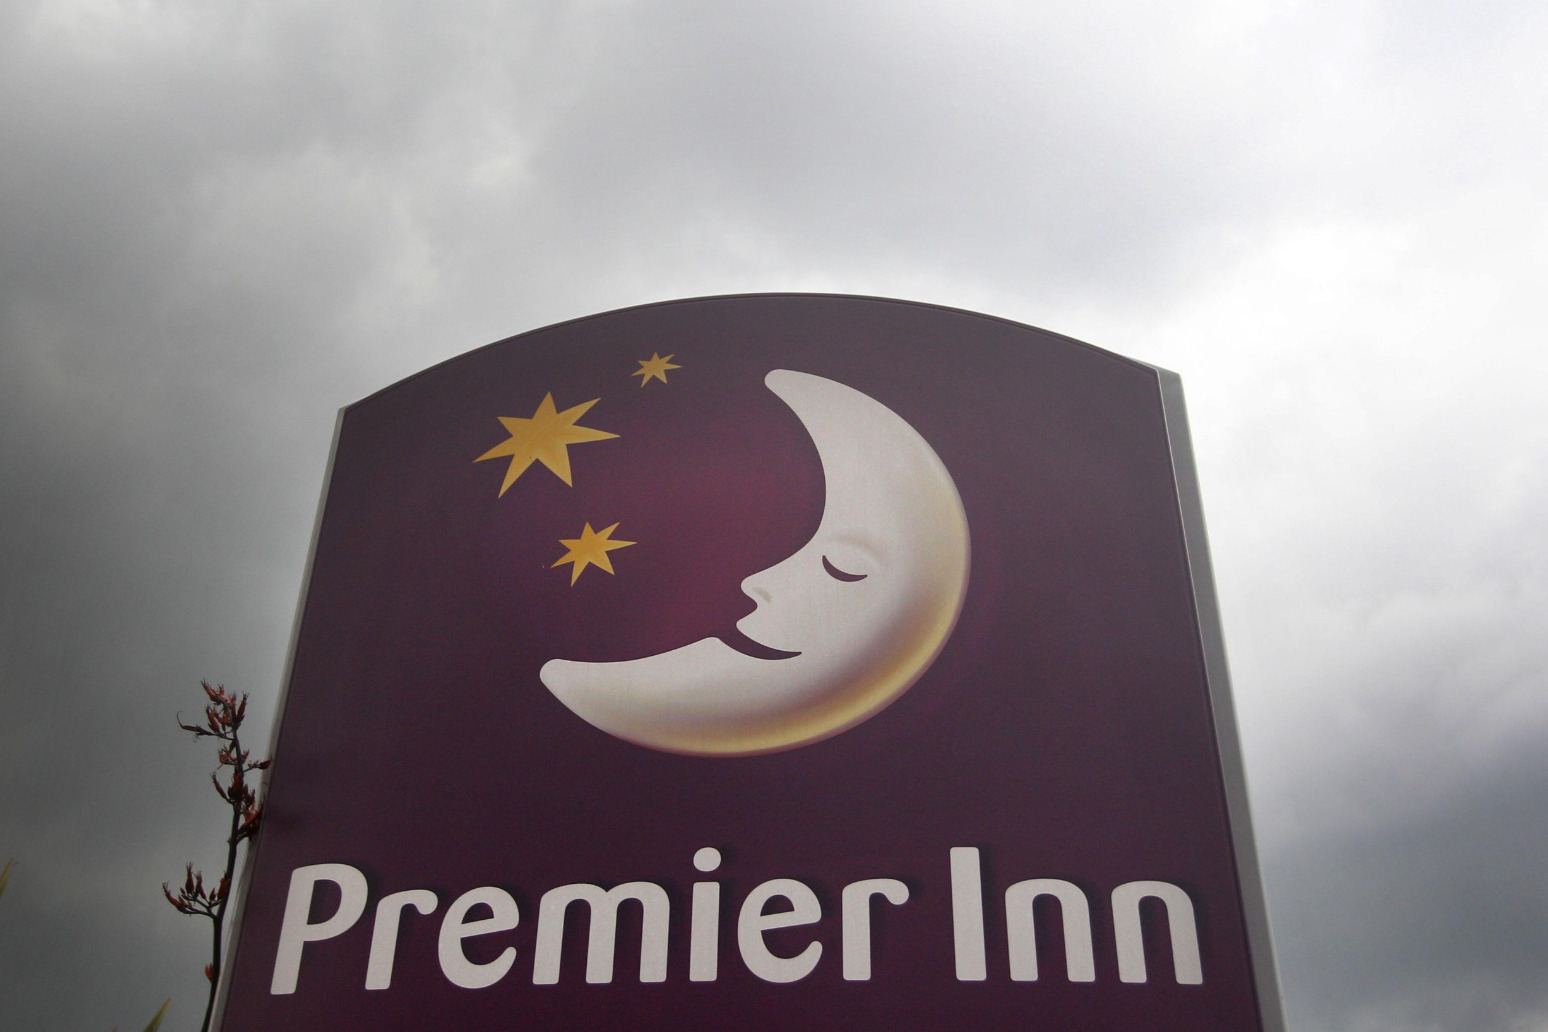 Premier Inn announce their latest set of results 